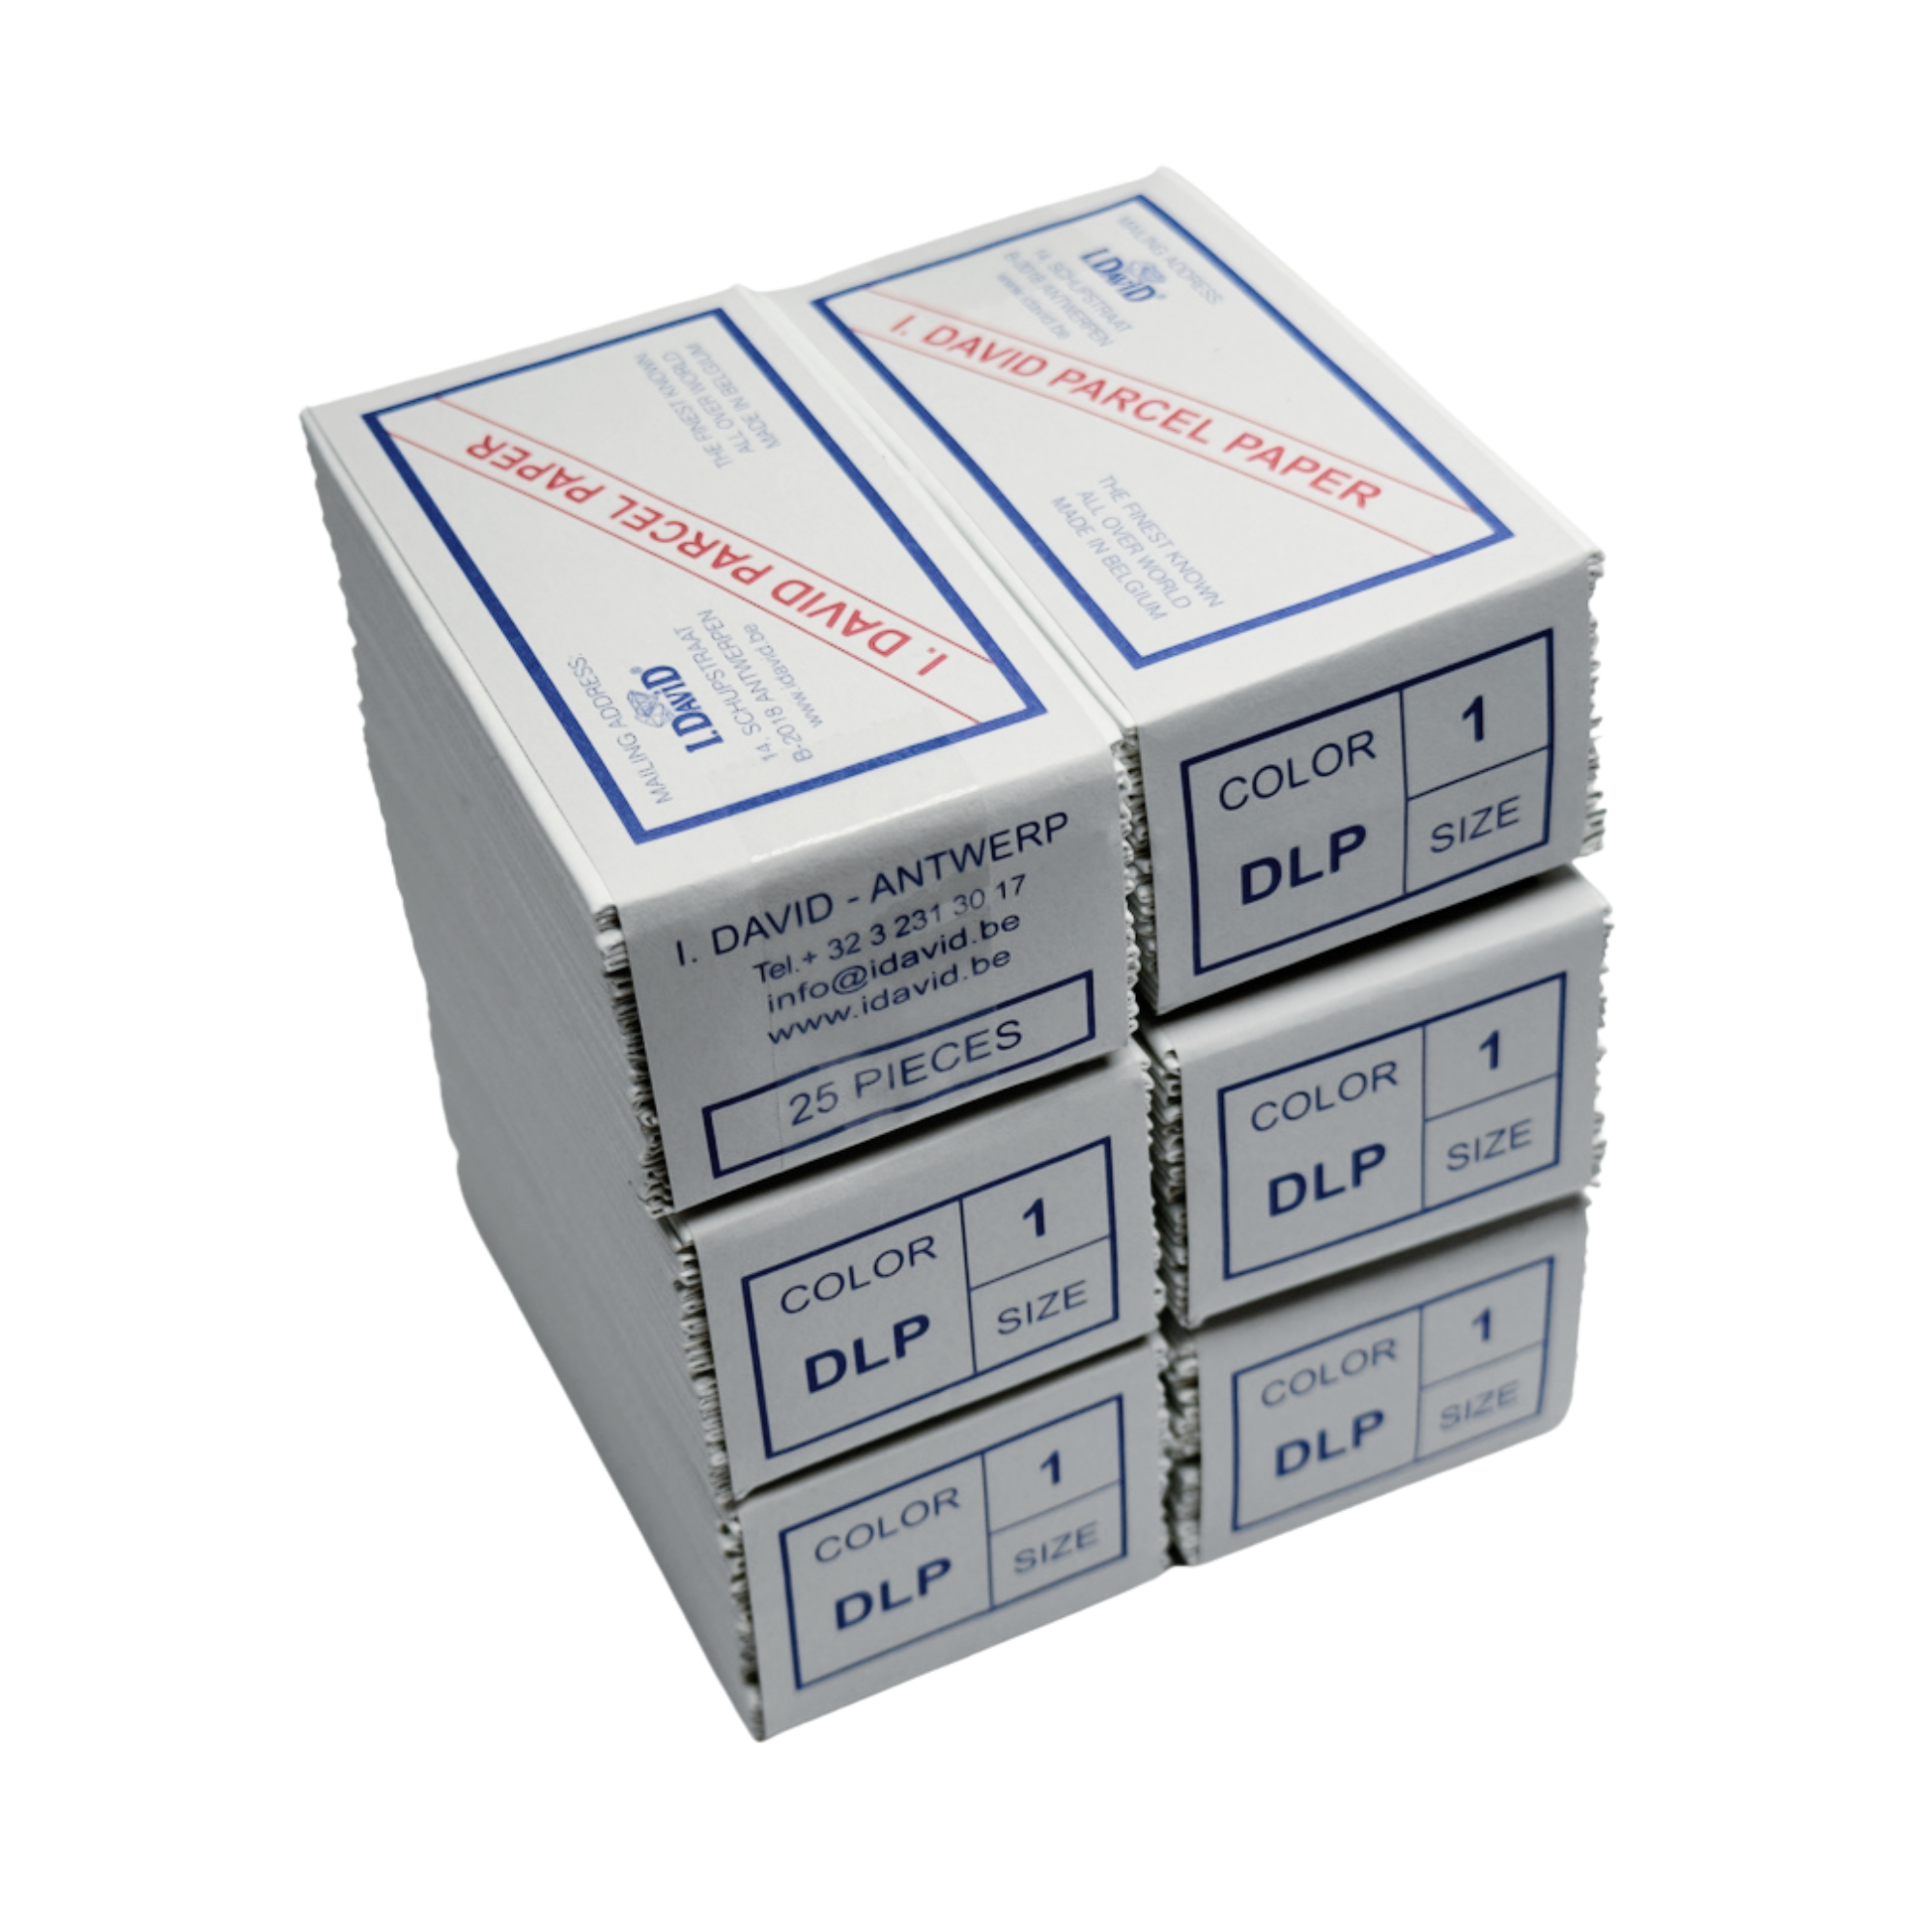 I.DAVID - DLP (Diamond Parcel Papers) Premium papirkuverter til ædelsten